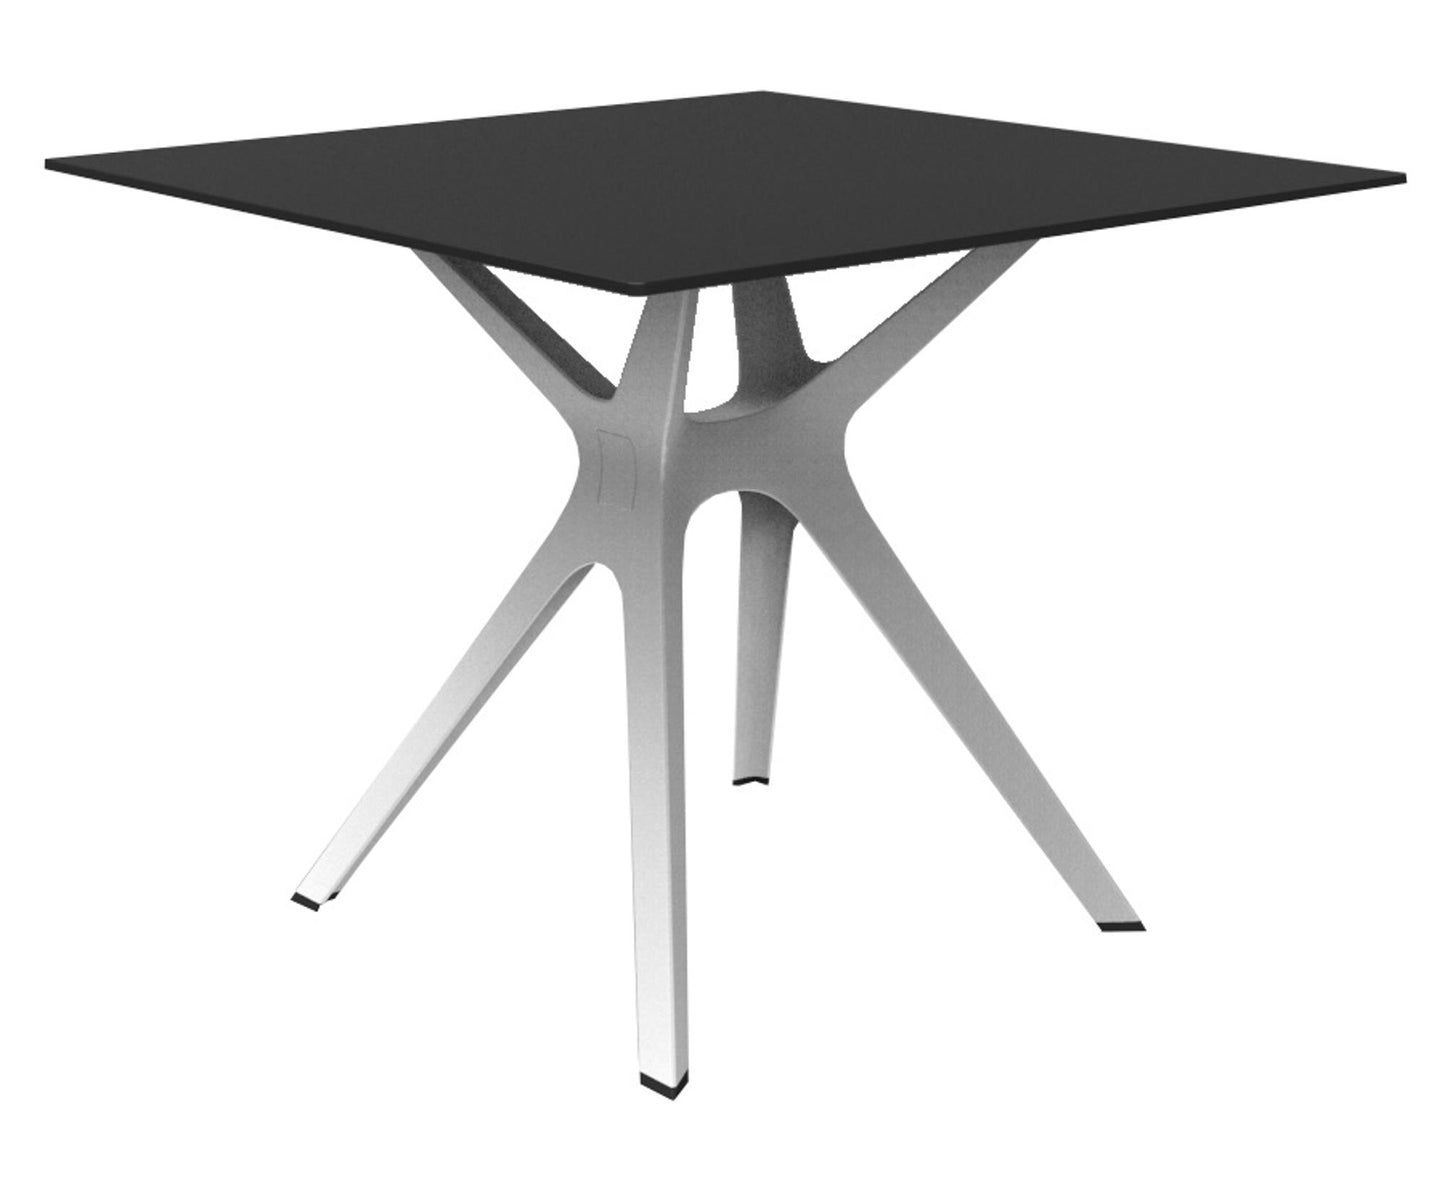 Resol vela s mesa cuadrada interior, exterior 90x90 pie blanco - tablero negro